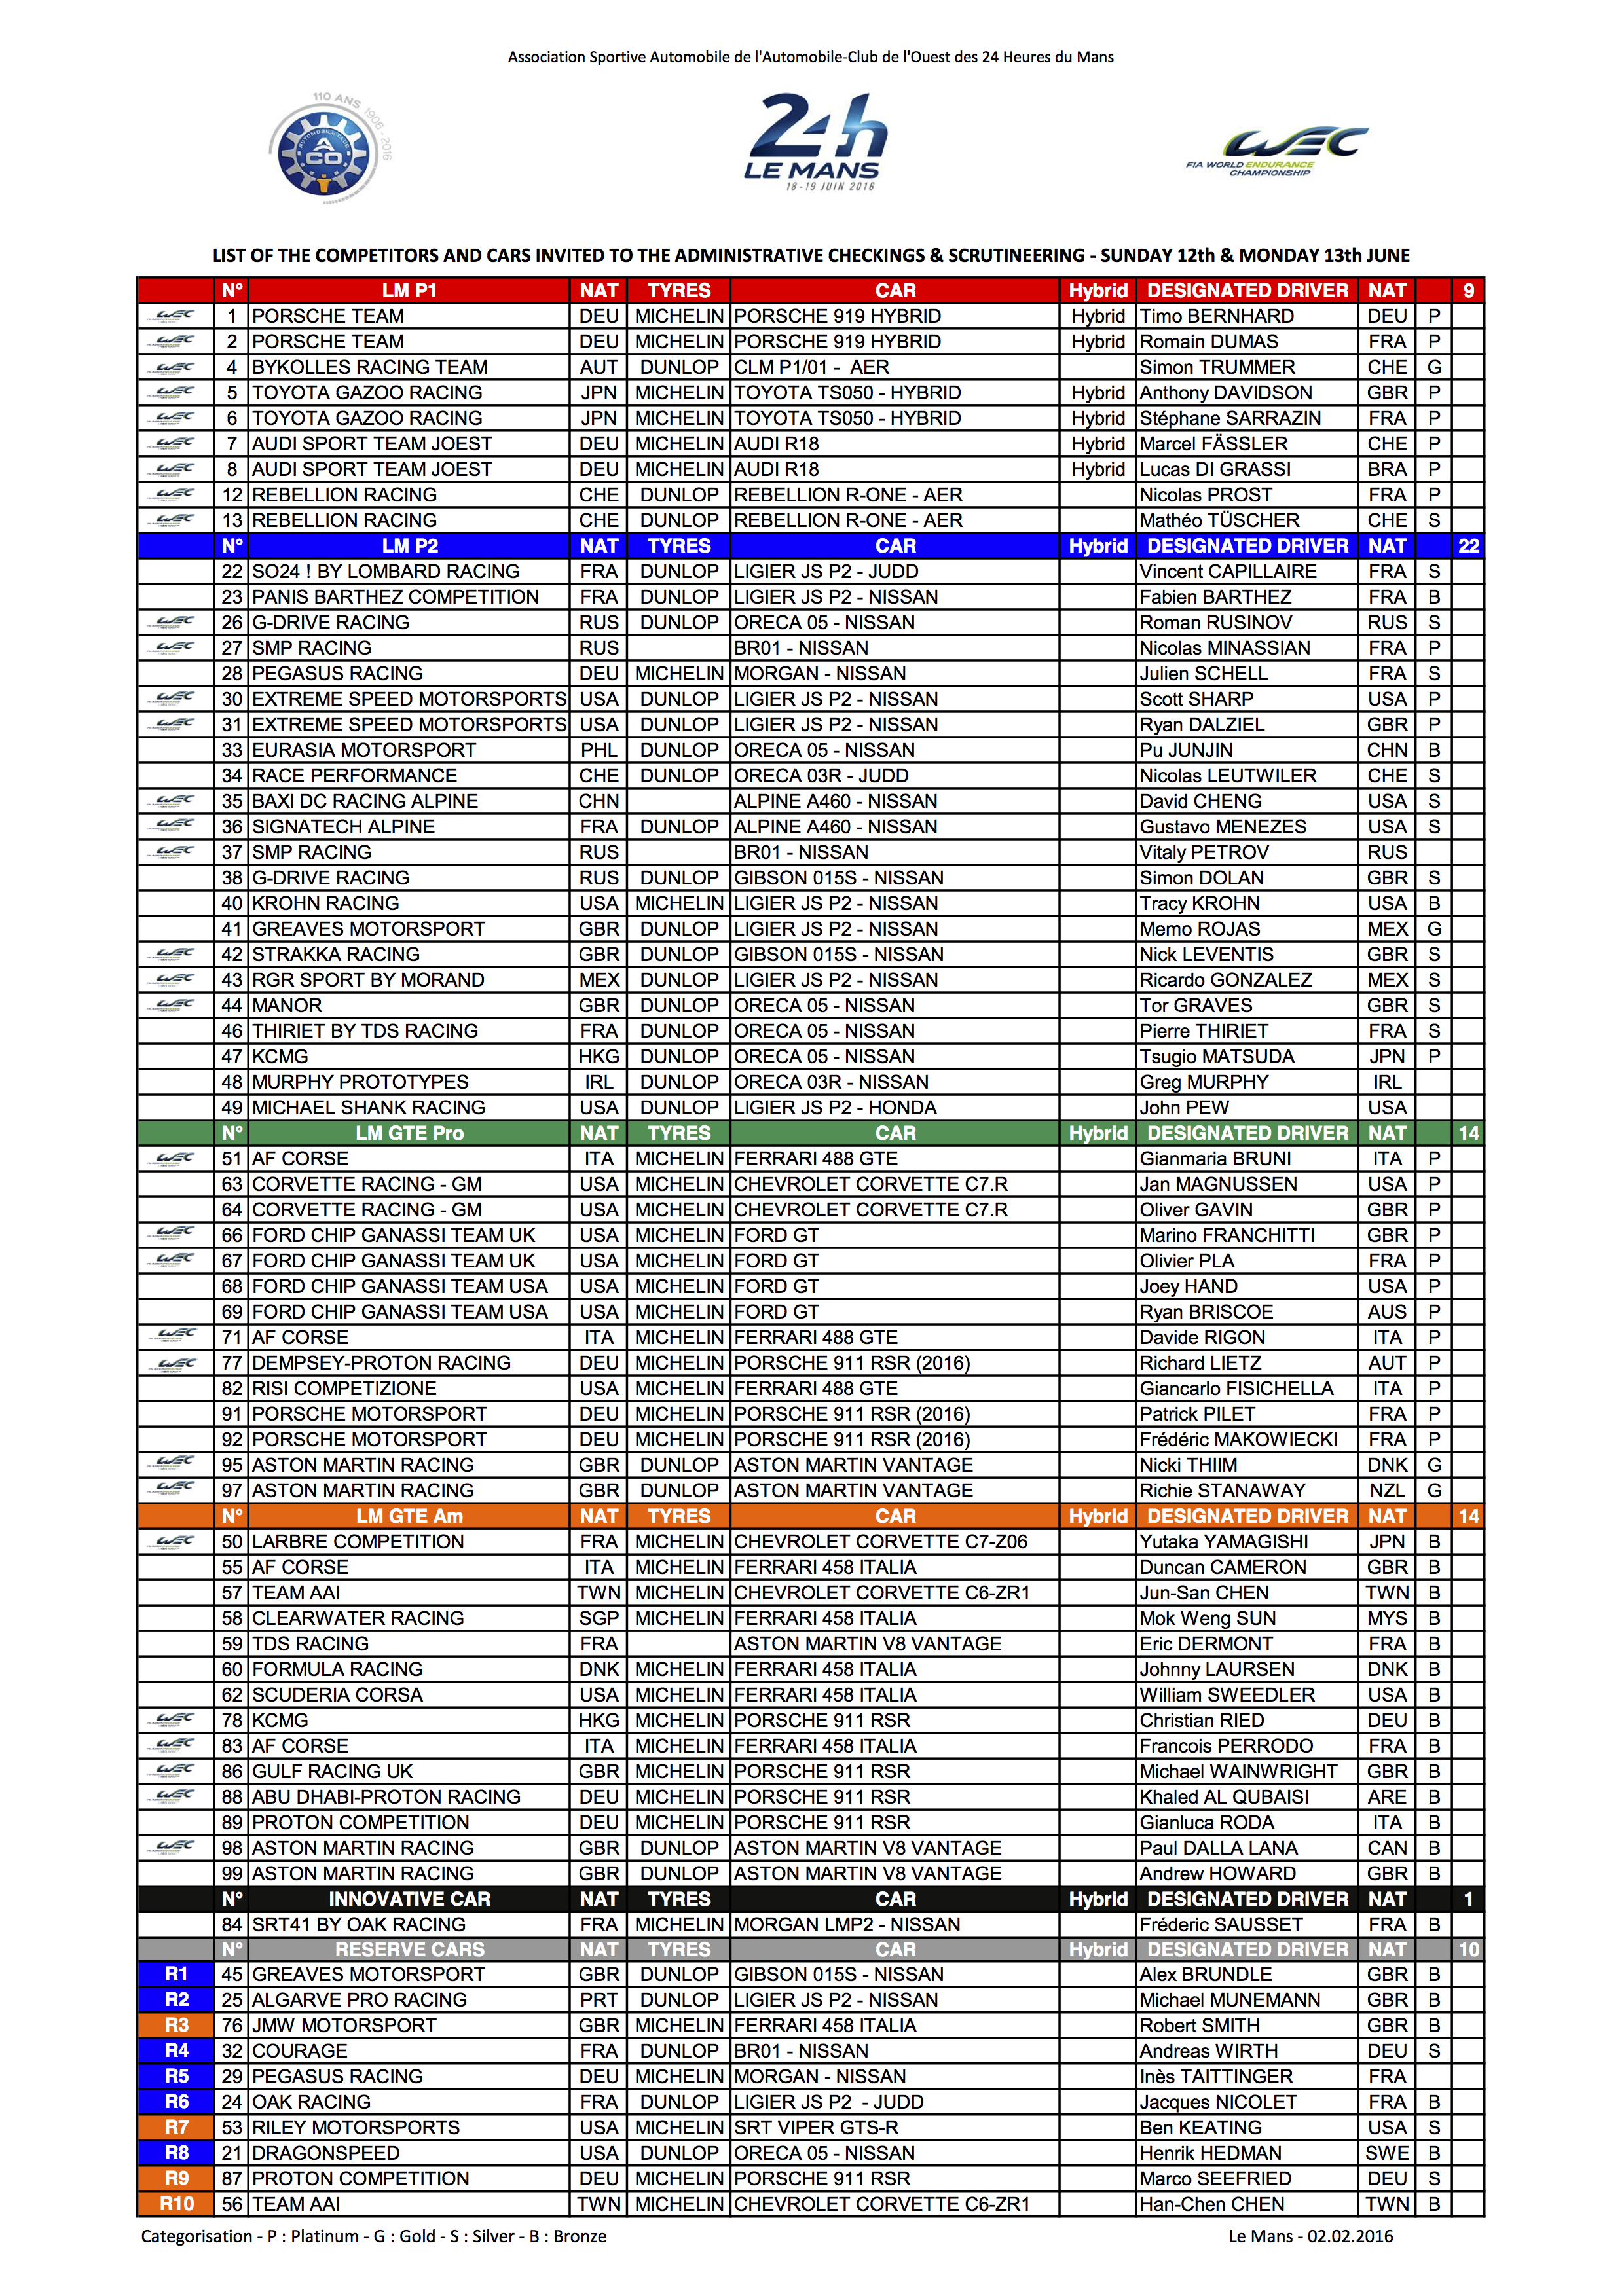 Le Mans 24 Hours Entry List